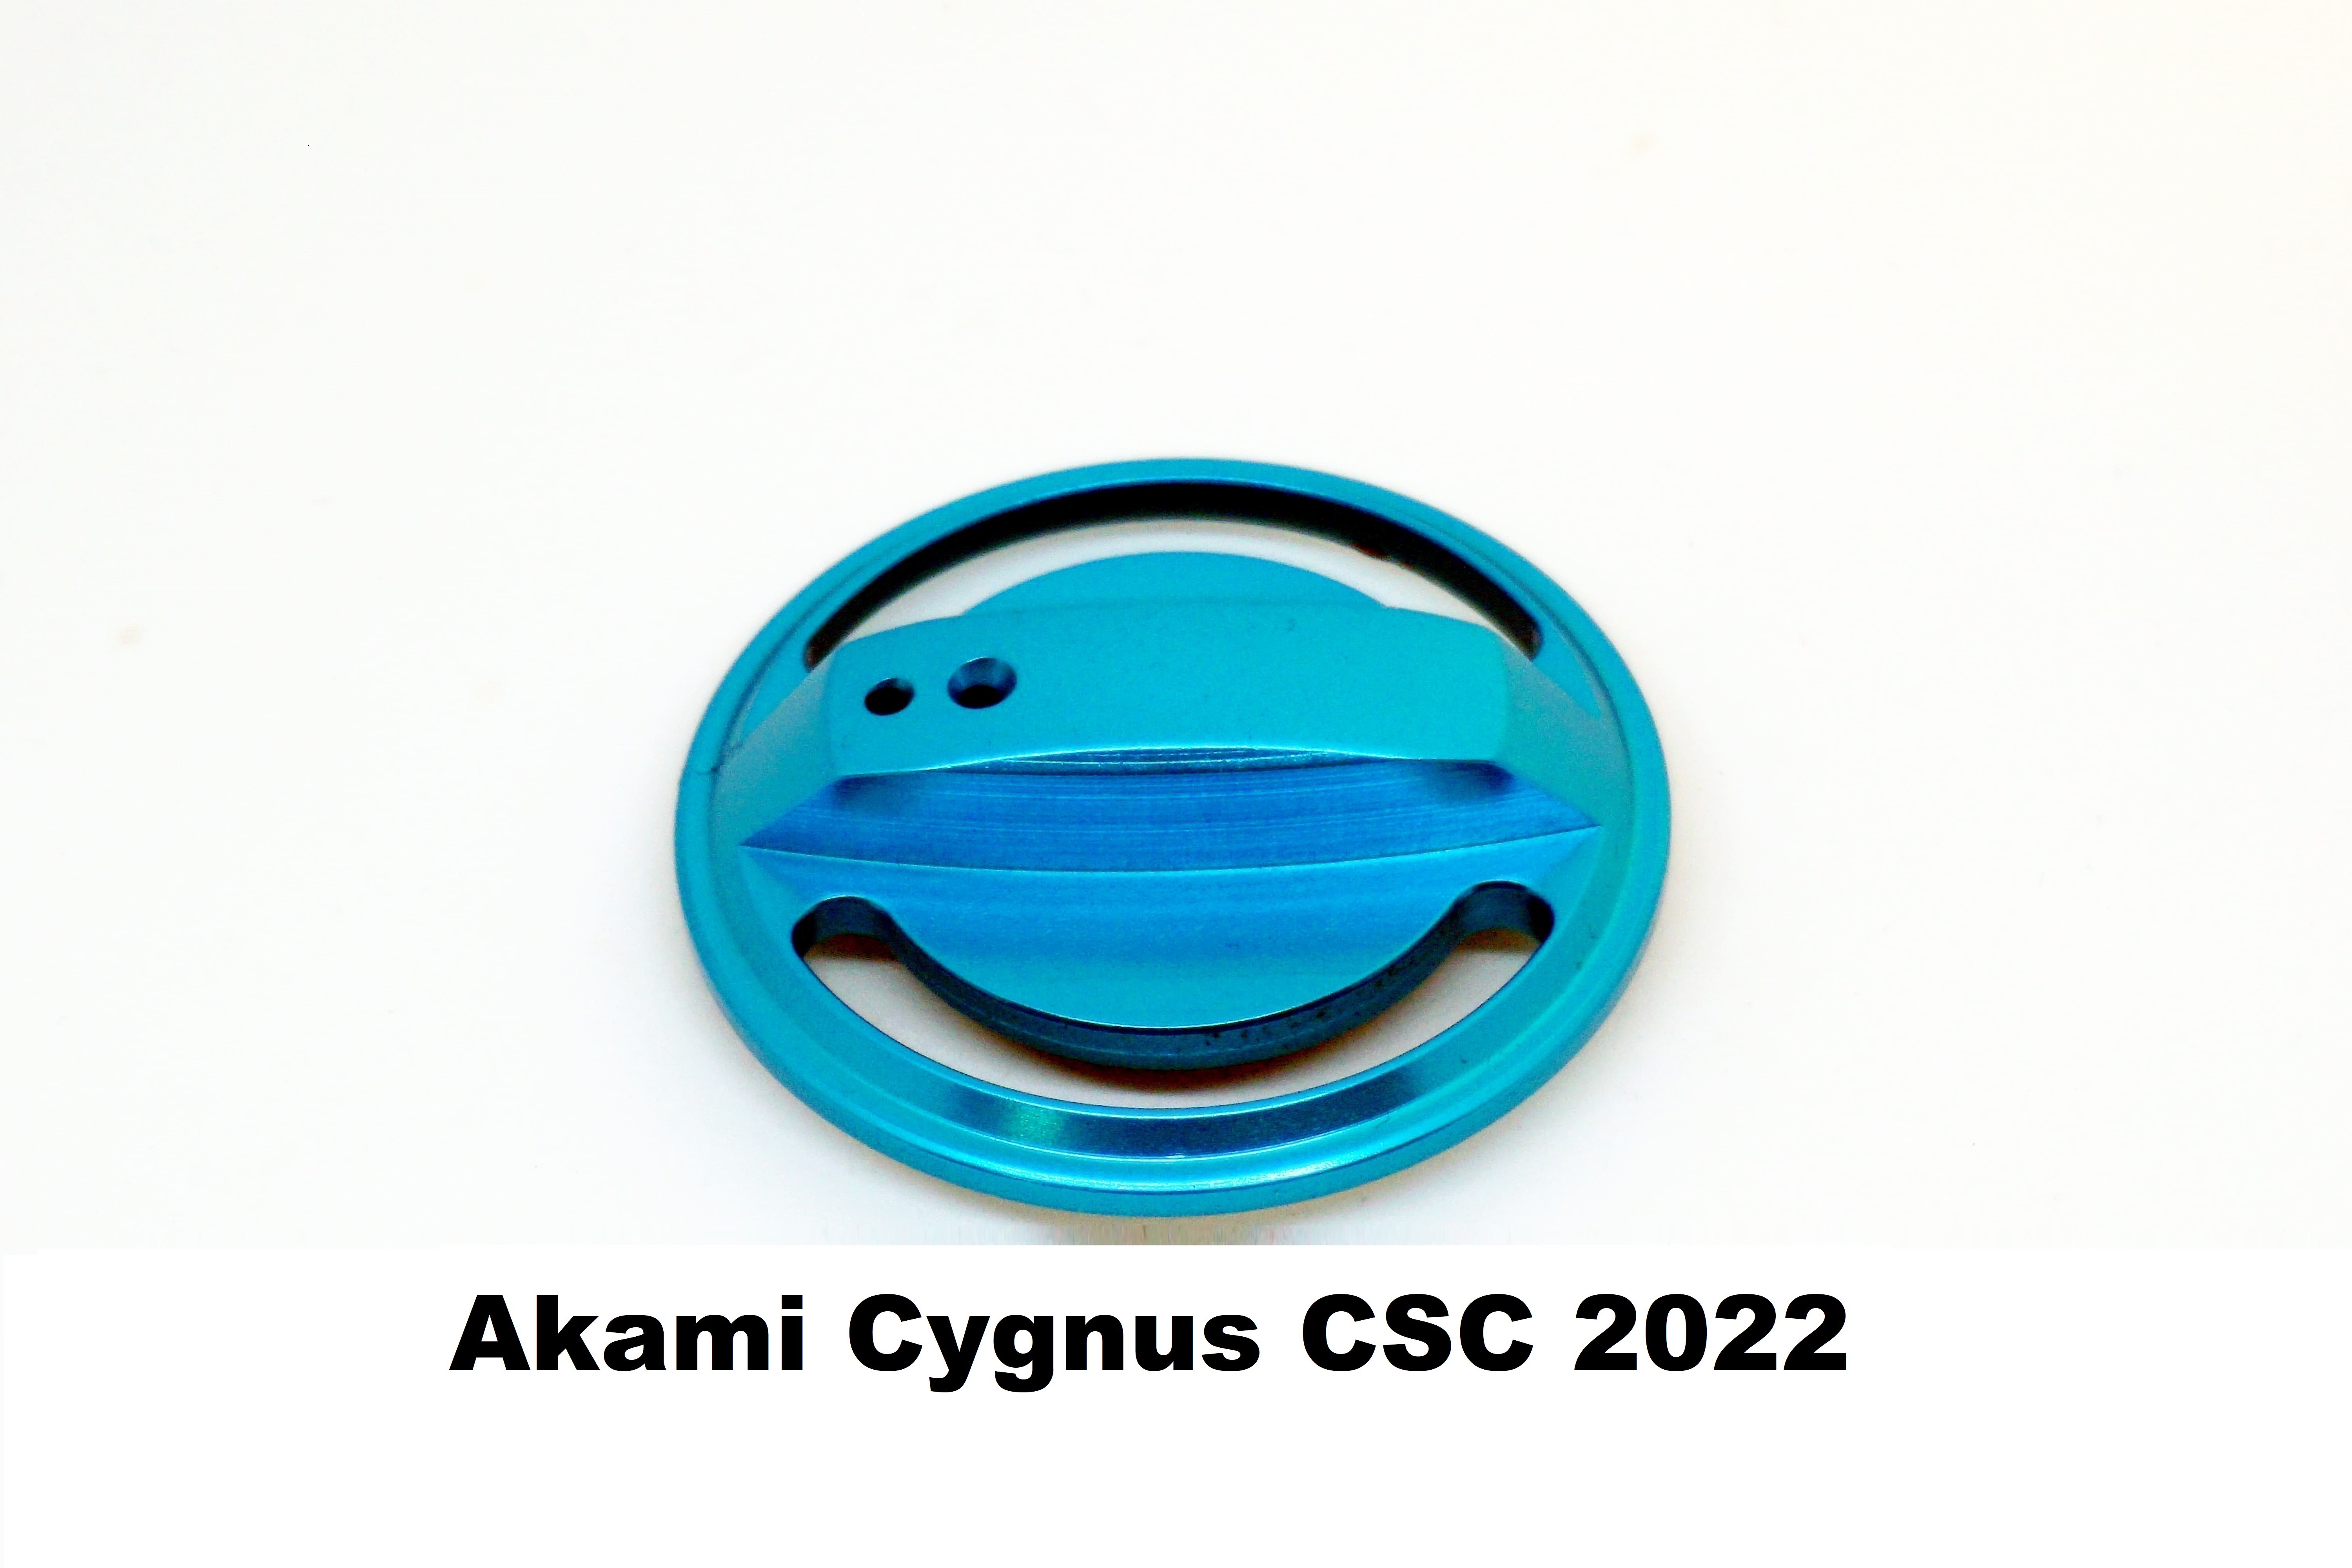 Bremsenknopf für Brandungsrolle Akami Cygnus CSC 2022